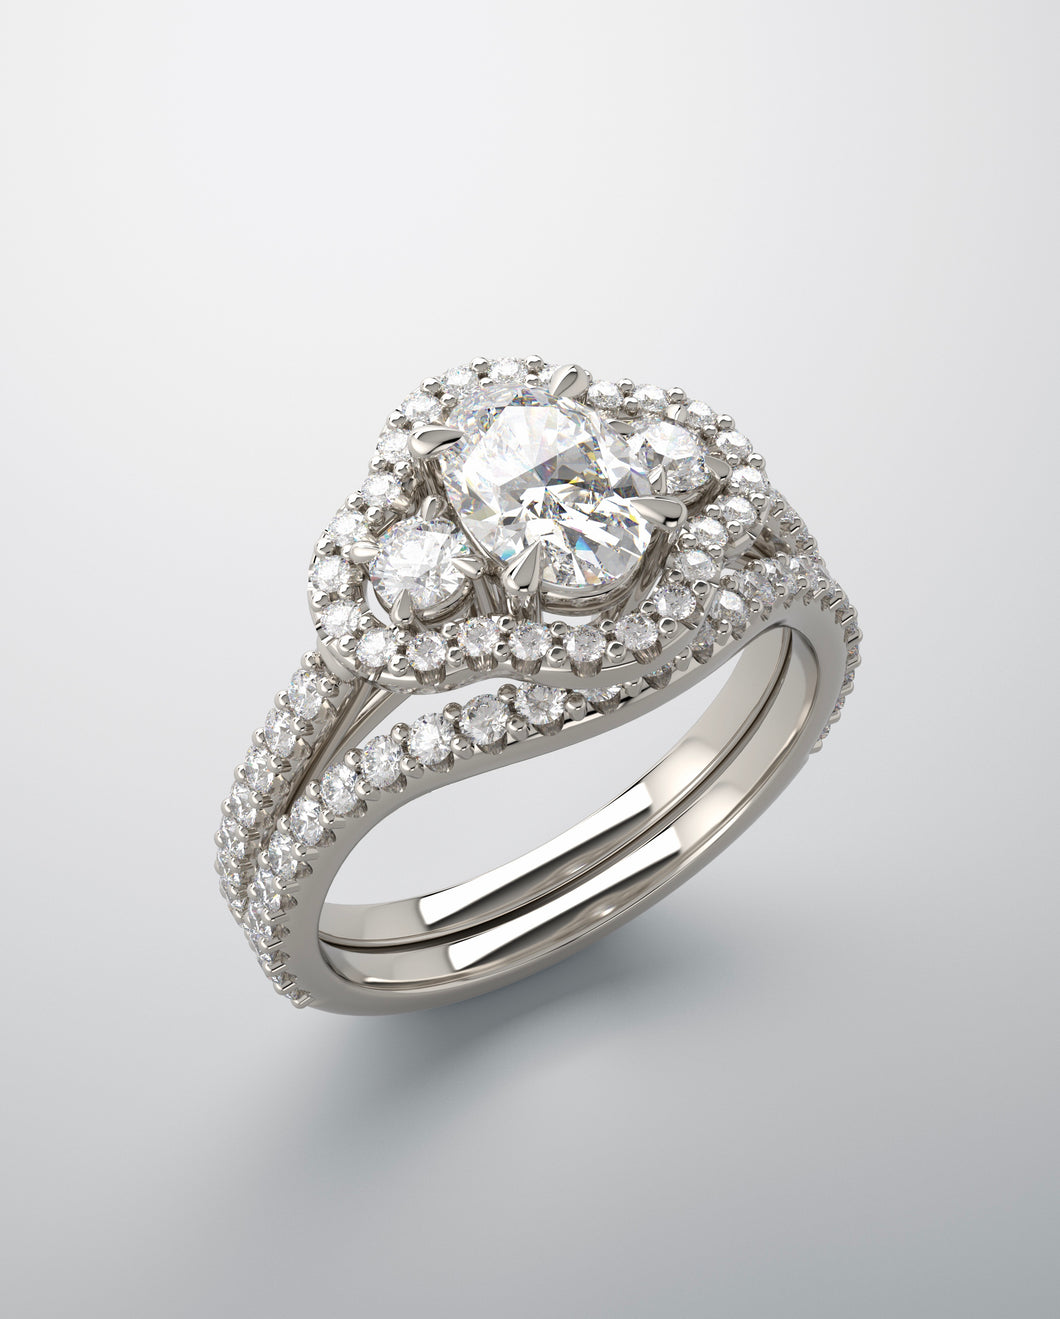 Bridal set continuum silver. Features lab grown diamonds